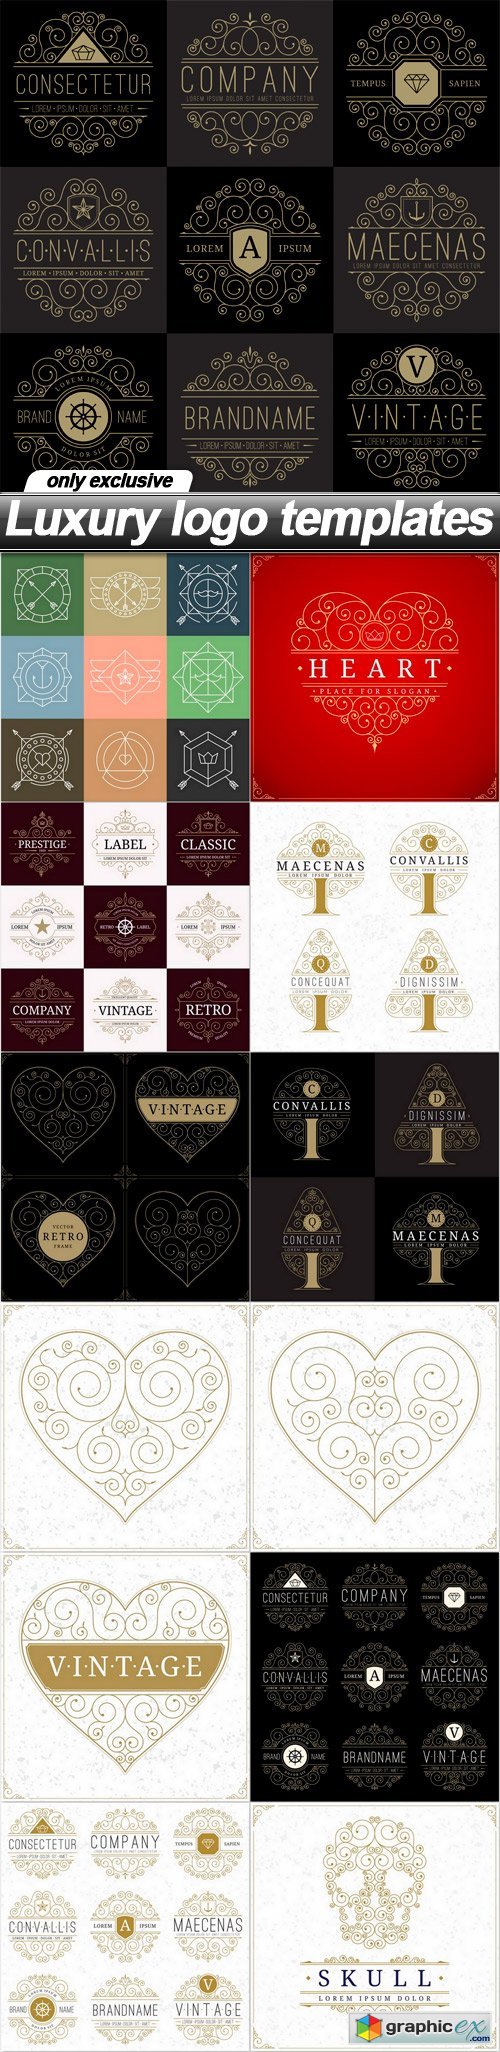 Luxury logo templates - 13 EPS